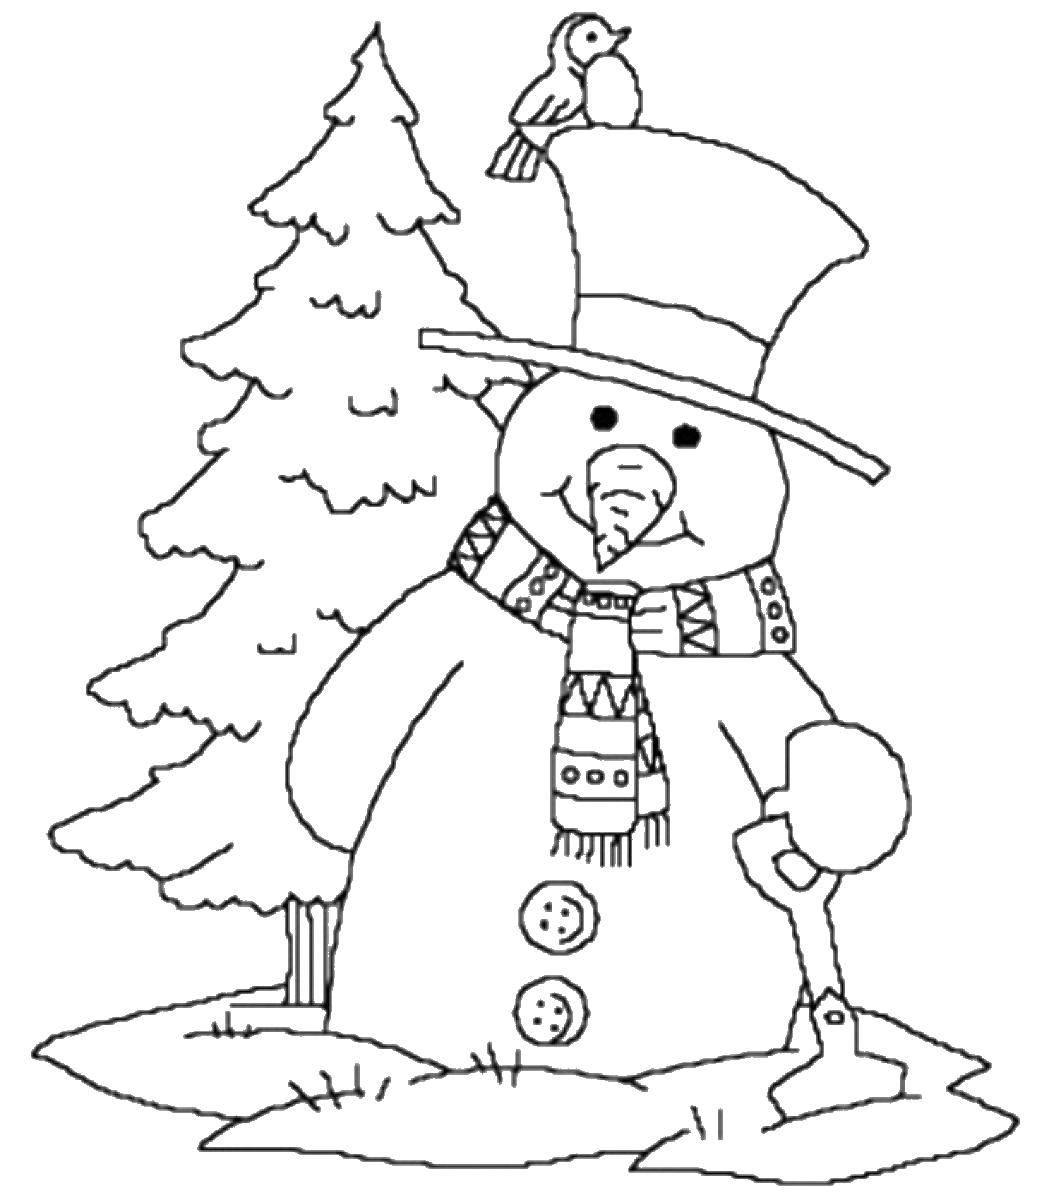 Название: Раскраска Снеговик с птичкой. Категория: раскраски зима. Теги: зима, снеговик, птичка.